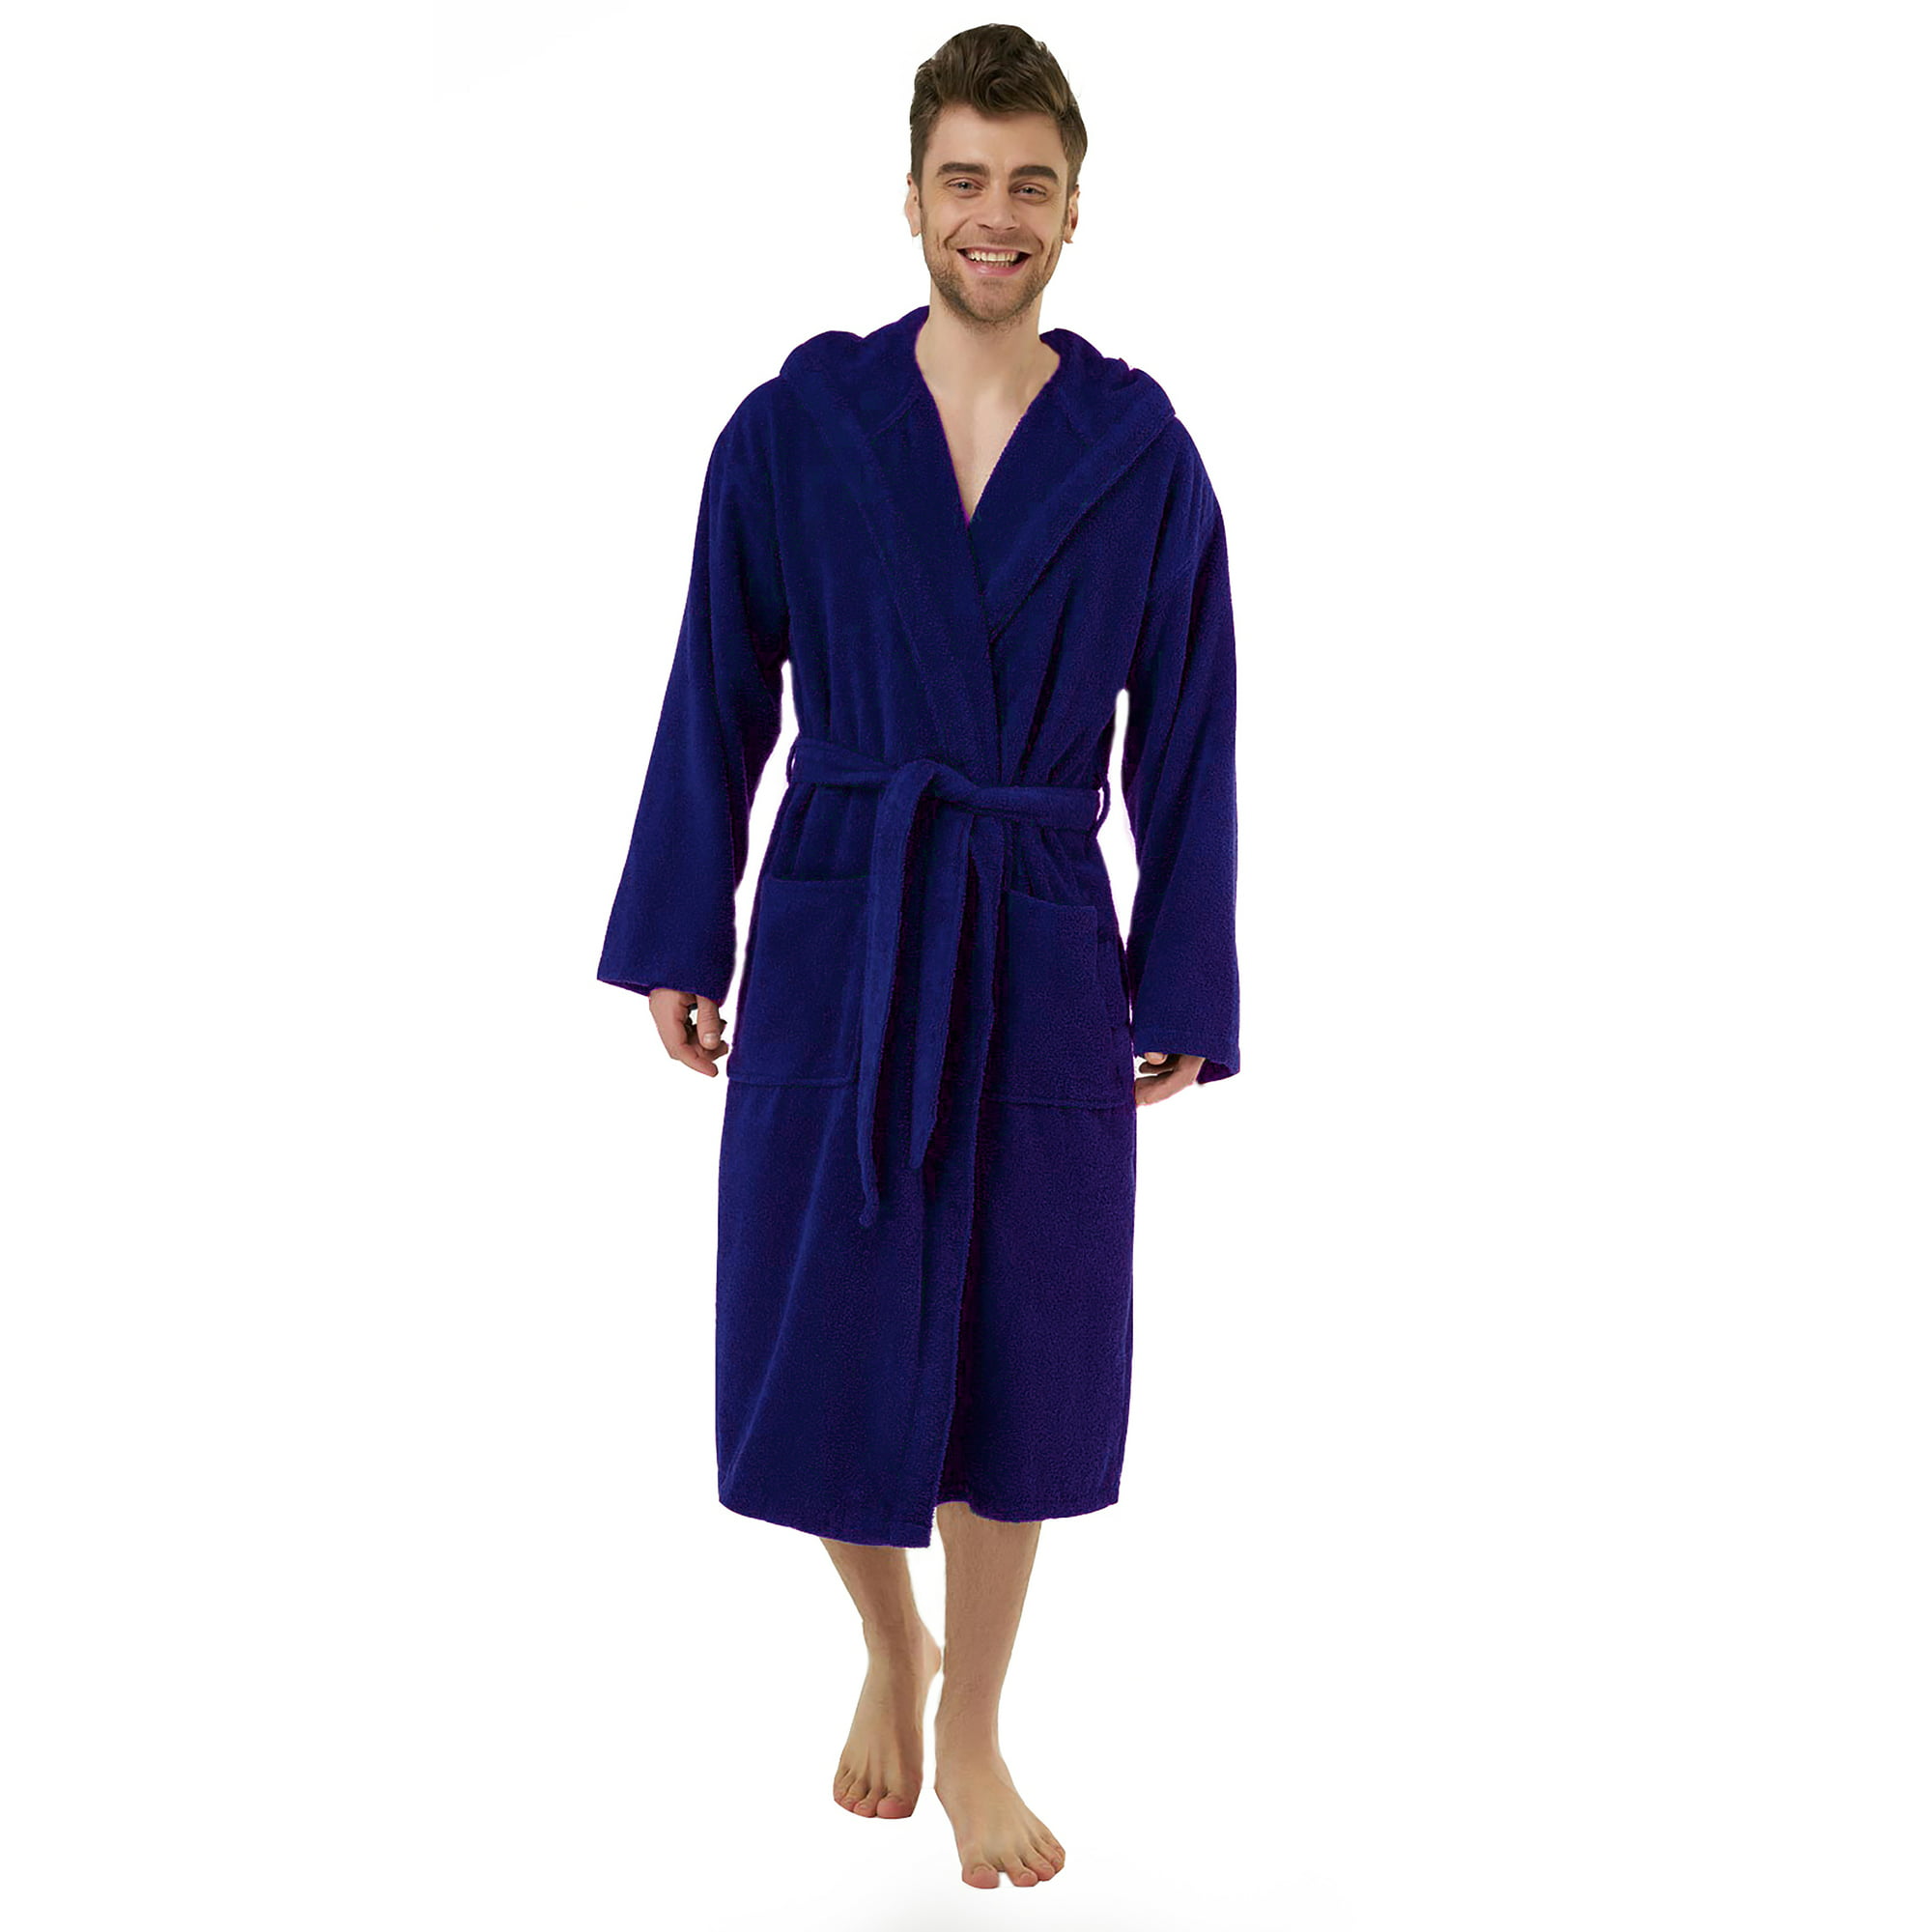 Spa & Resort Sales Royal Blue Hooded Robe for Men, 50 inch Length, Adult XL. Spa & Resort Sales